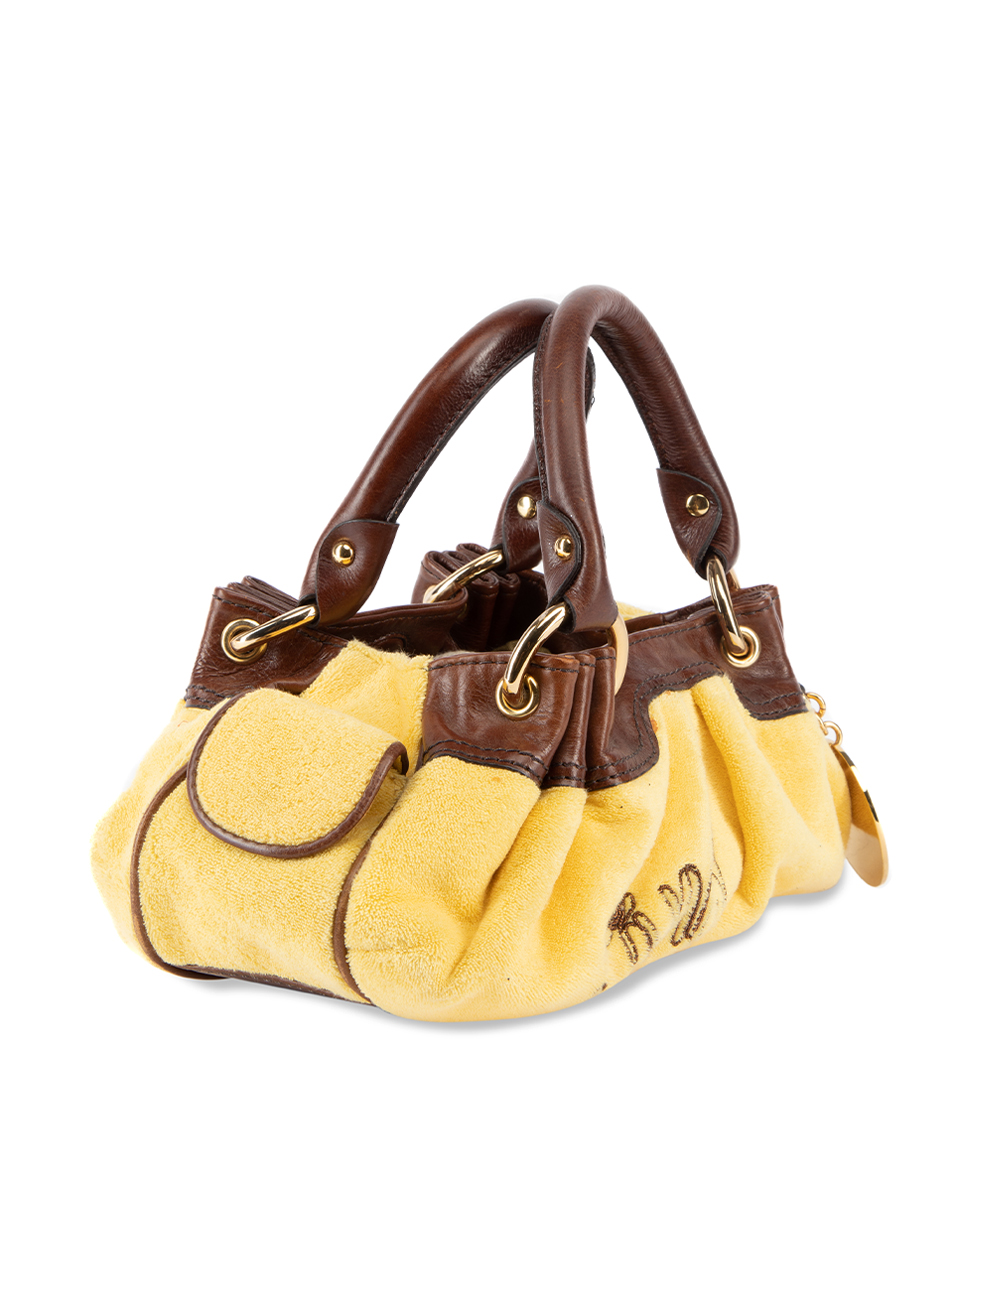 Juicy Couture Brown Quilted Velvet Handbag